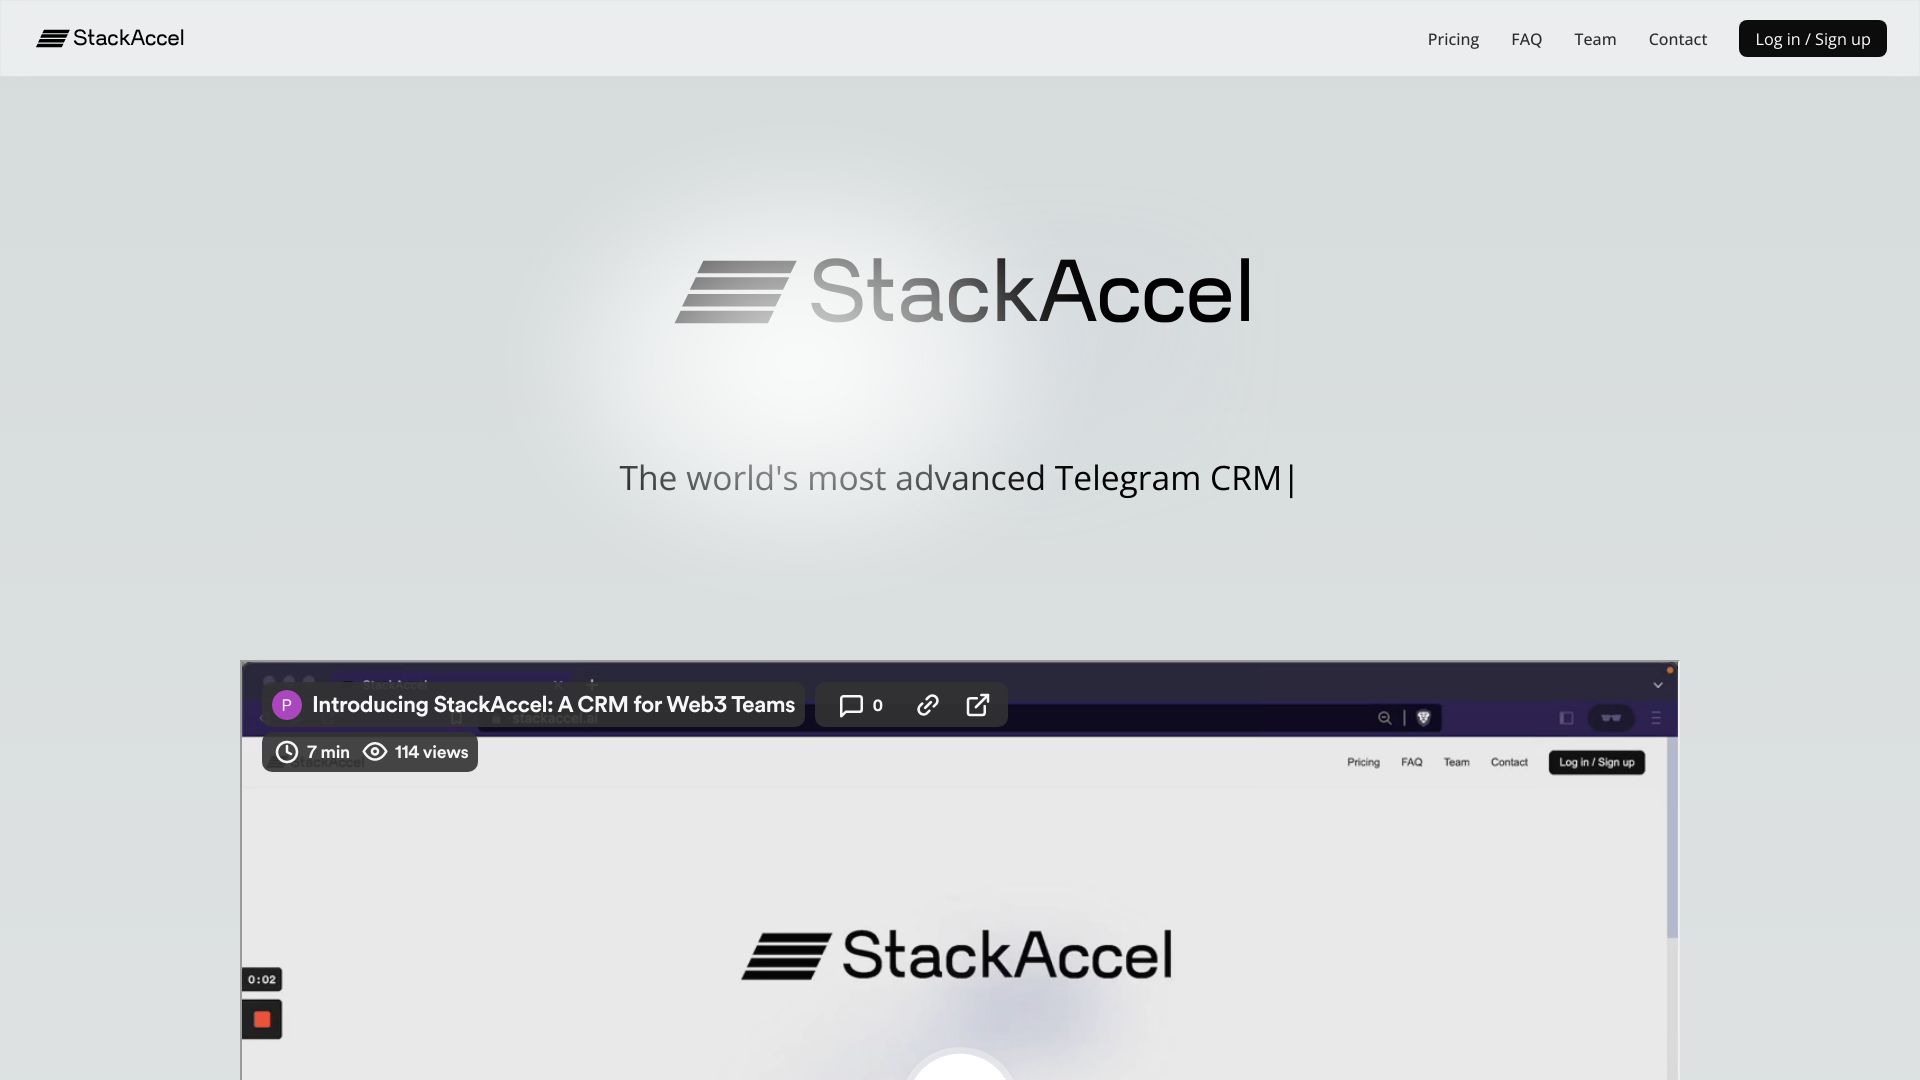 StackAccel